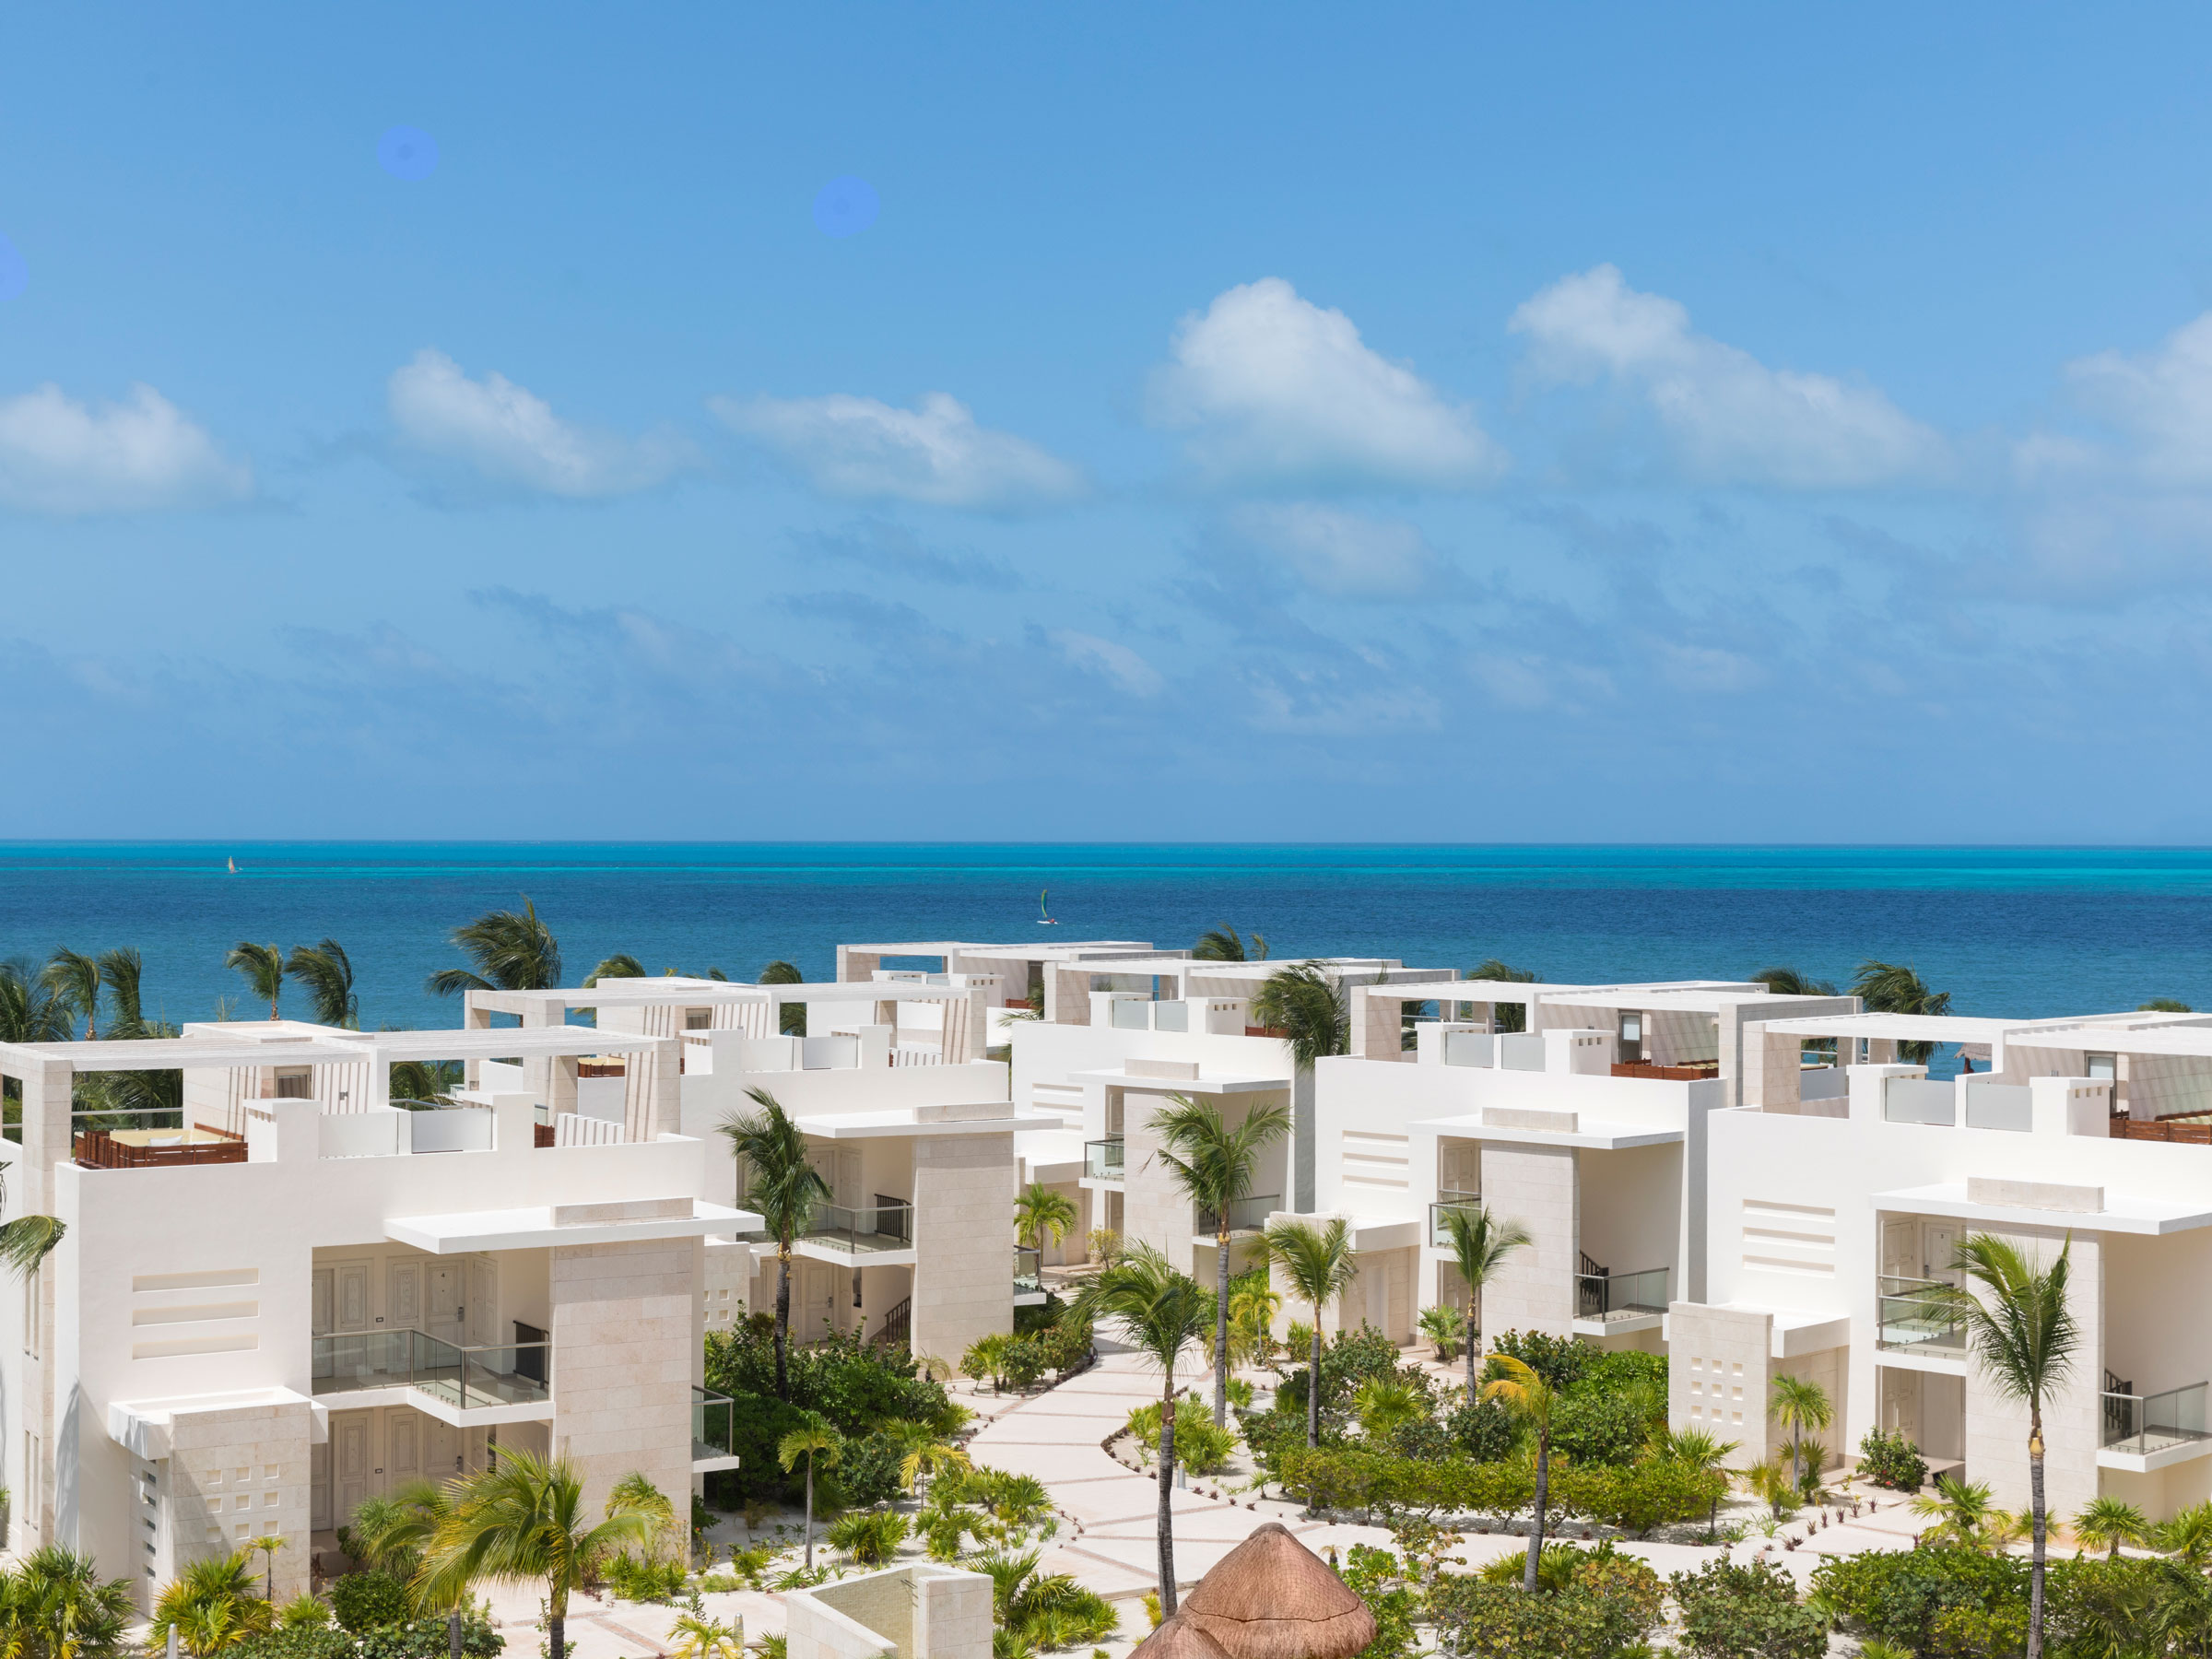 Beloved Playa Mujeres Hotel with an Ocean View